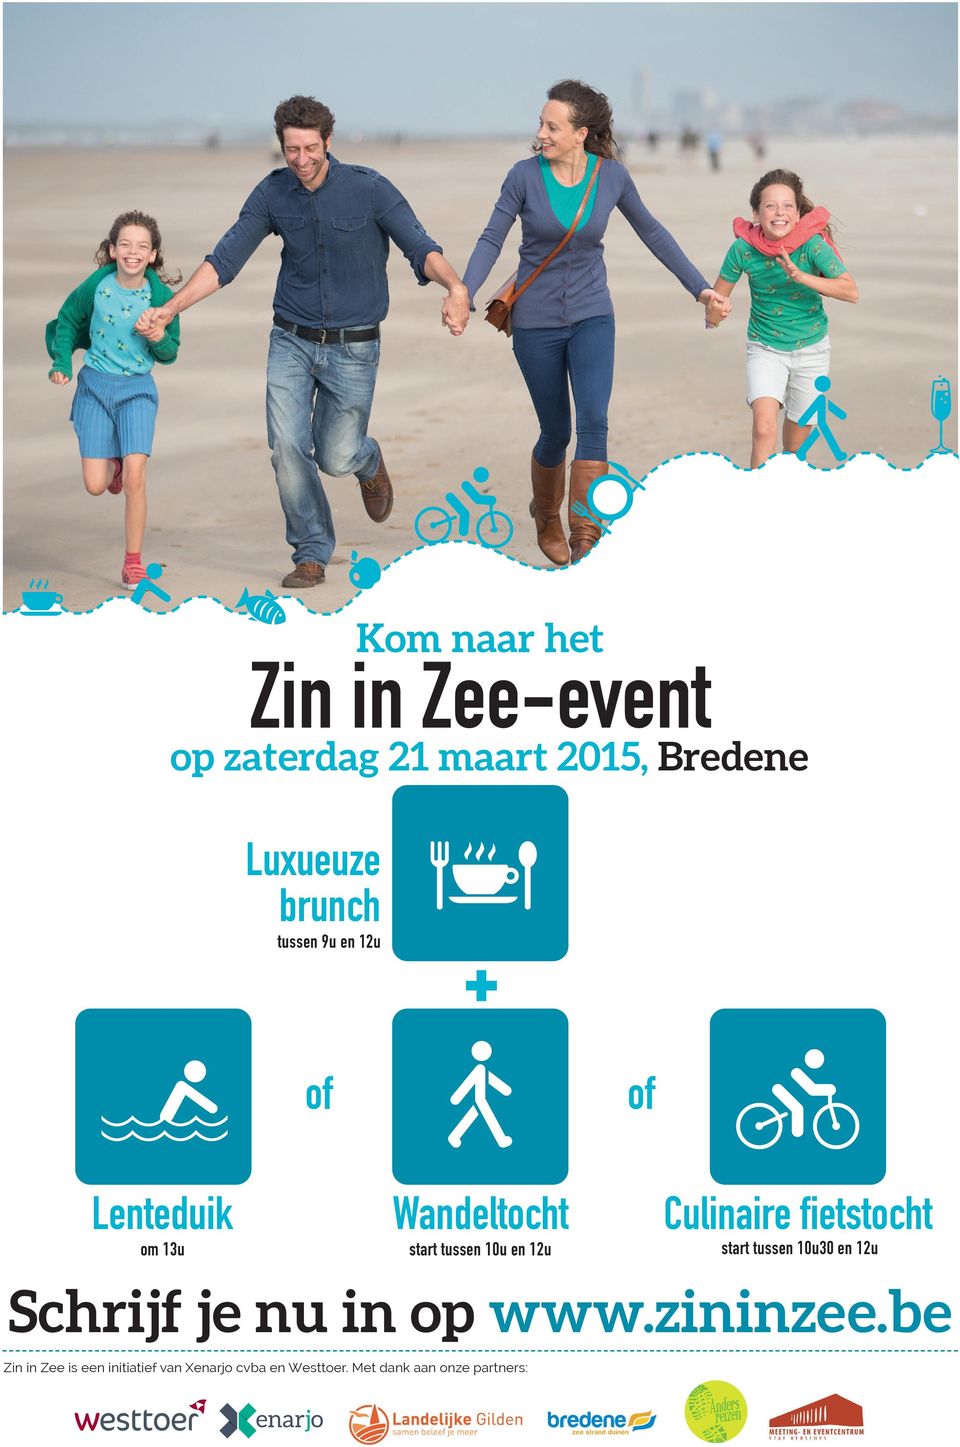 Culinaire fietstocht start tussen 10u30 en 12u Schrijf je nu in op www.zininzee.